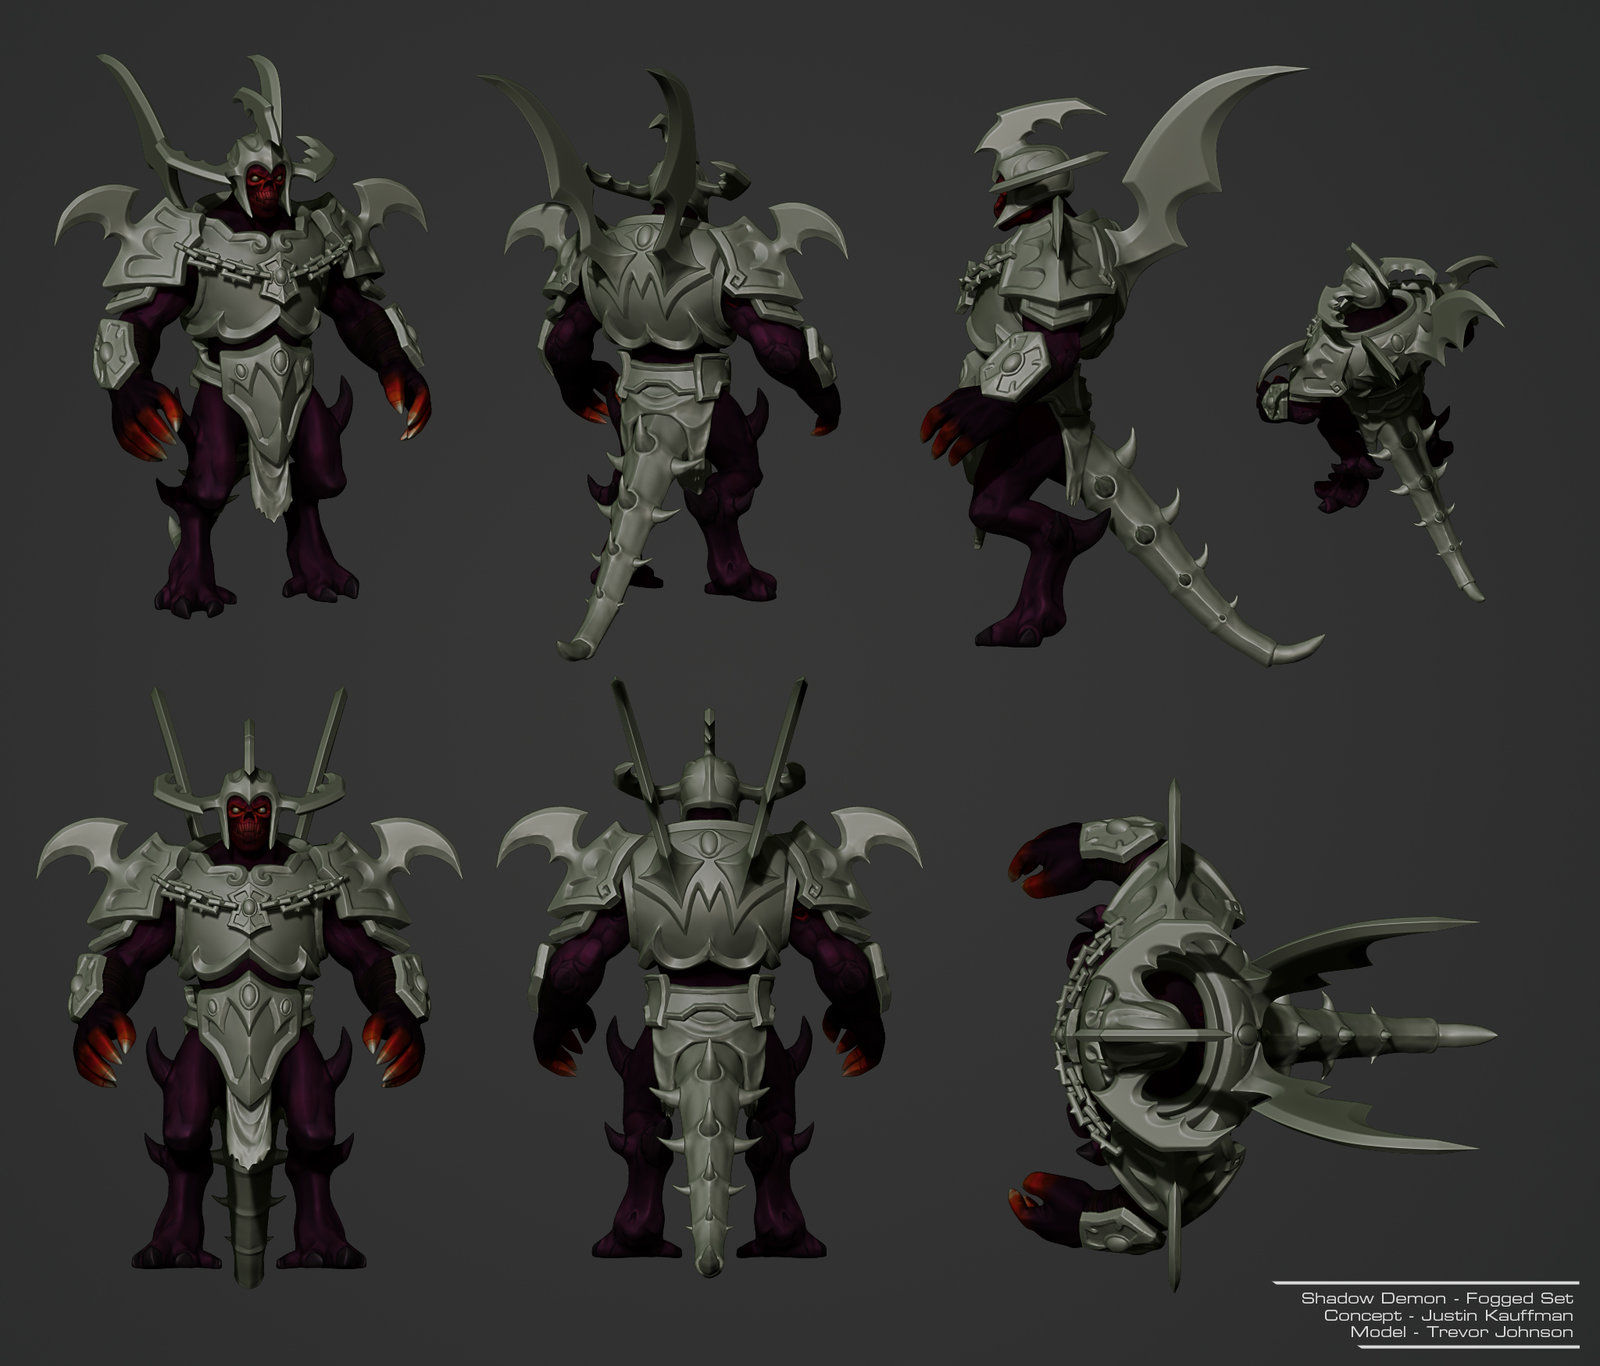 Trevor Johnson - Shadow Demon, armor set